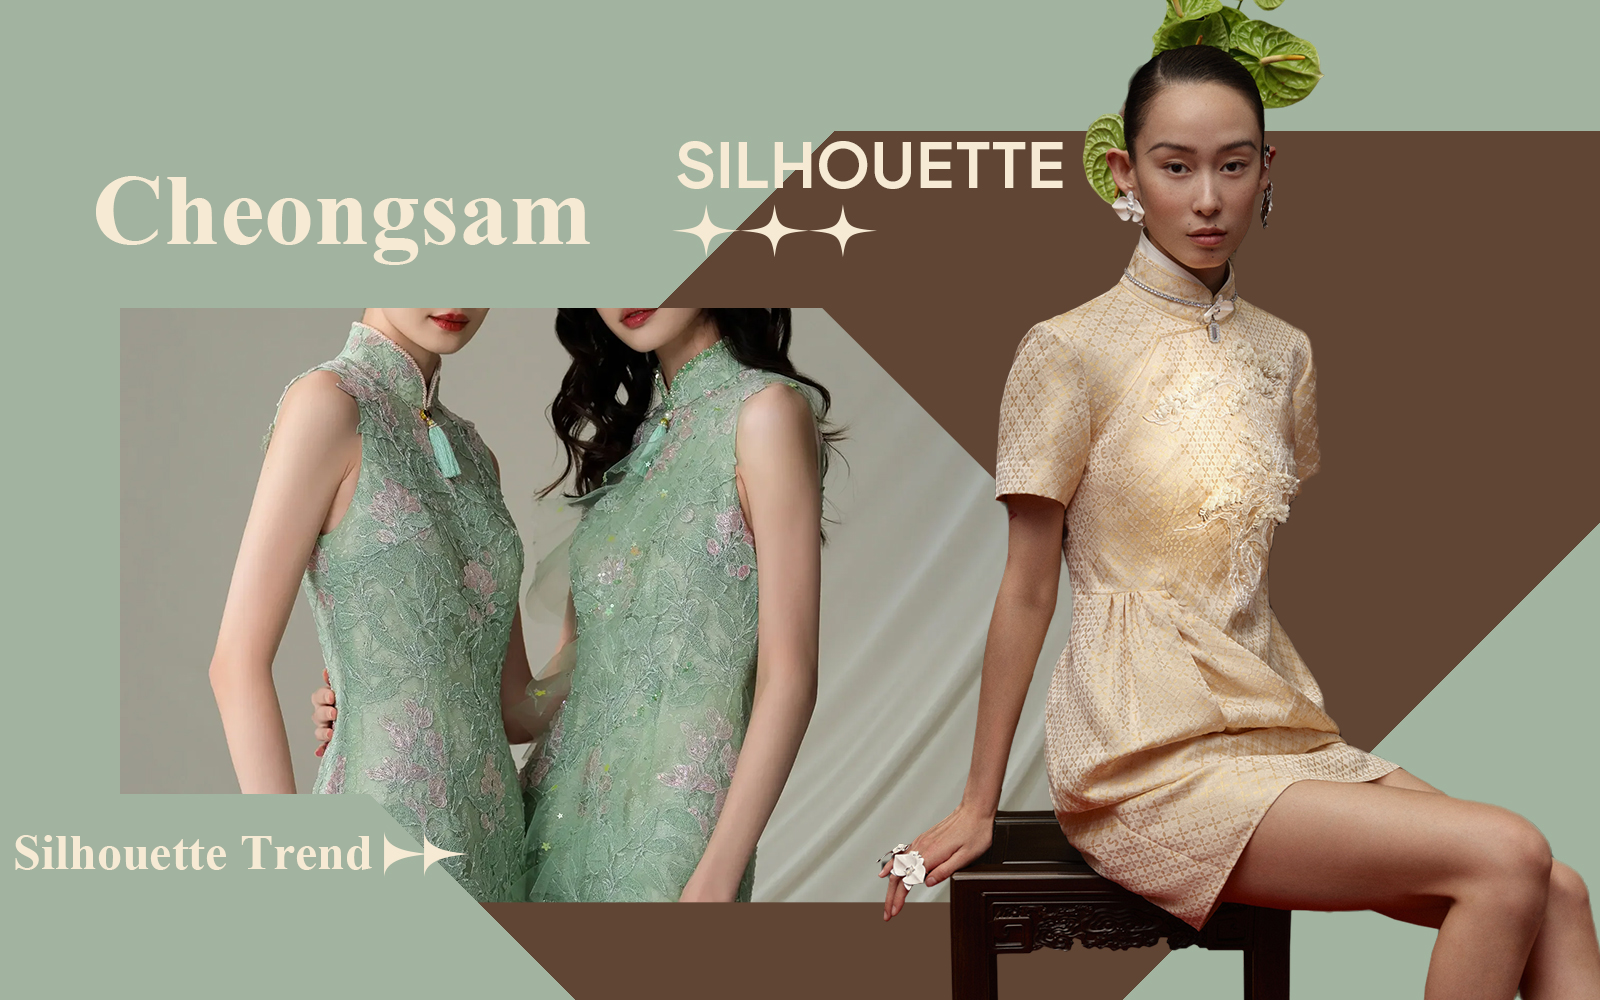 The Silhouette Trend for Women's Cheongsam